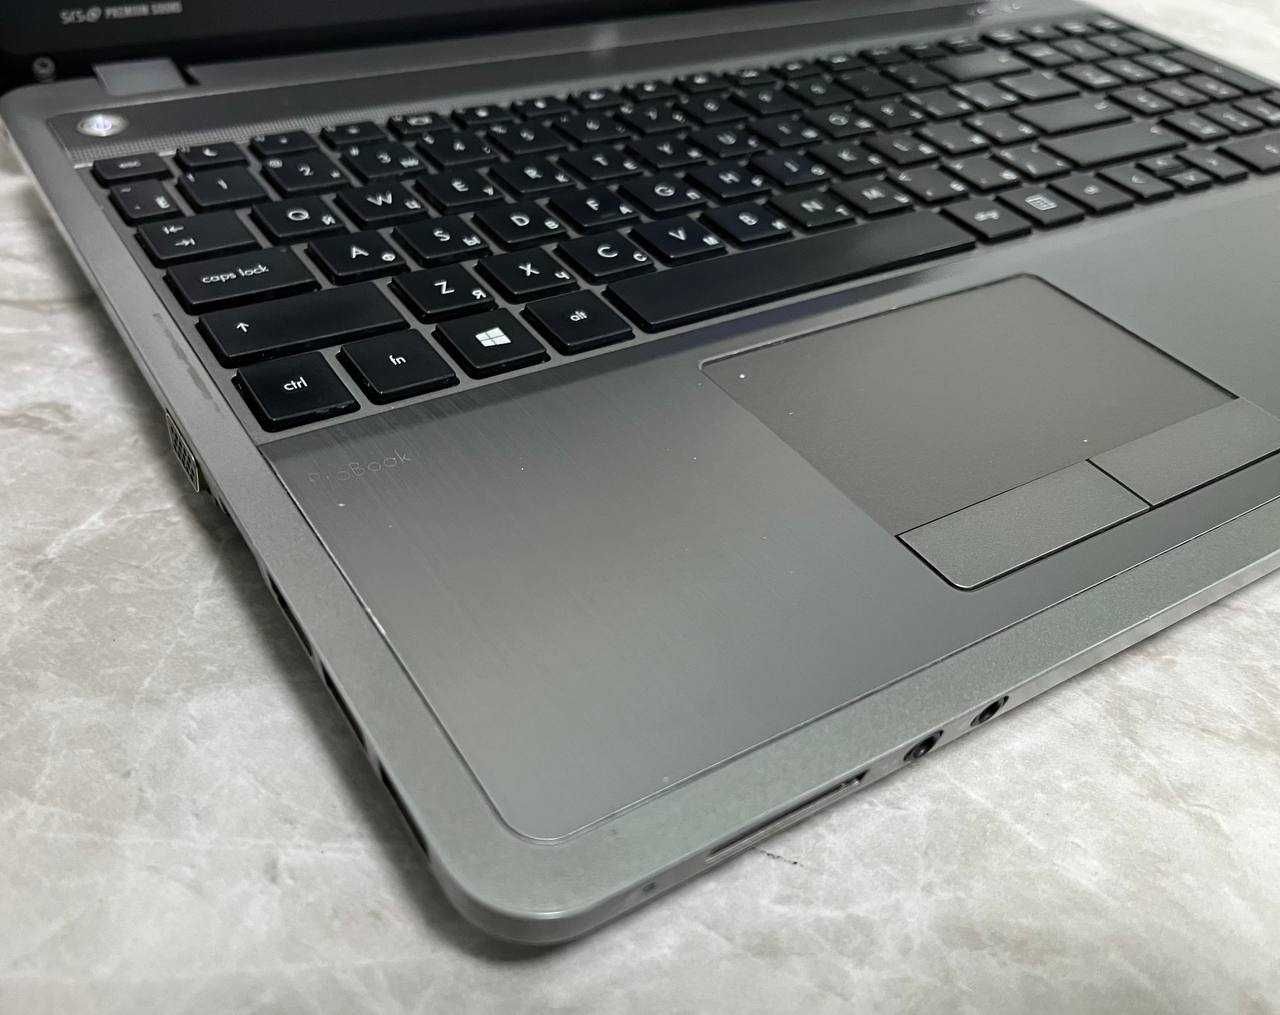 HP ProBook  Core i5/3*ОЗУ 8/SSD128/HDD 500 Для офиса